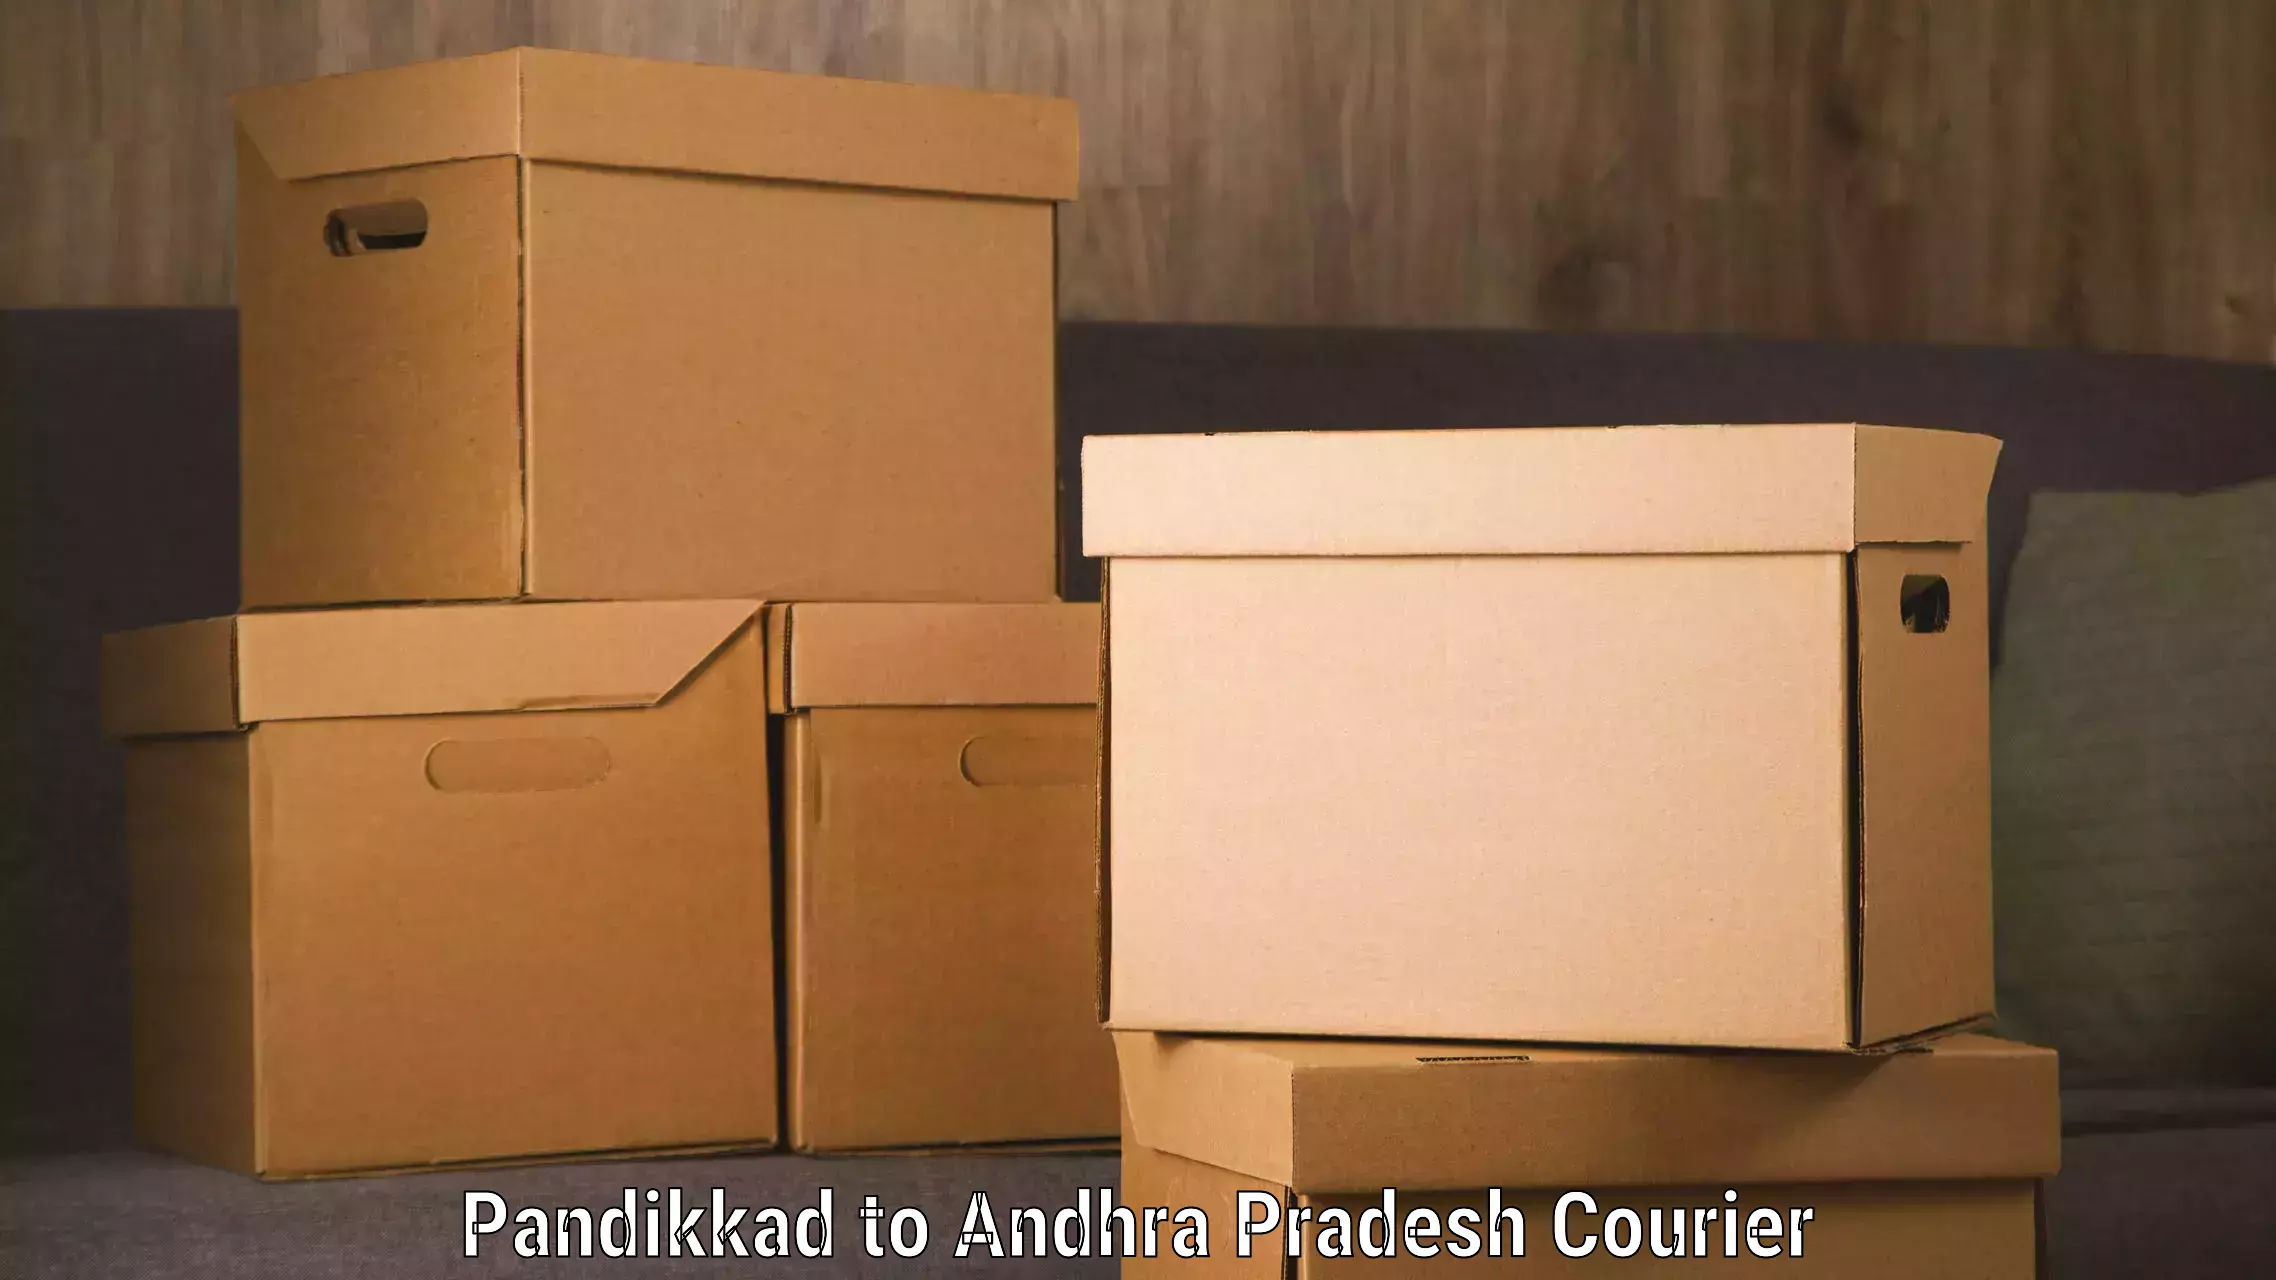 Express delivery capabilities in Pandikkad to Achampet Palnadu